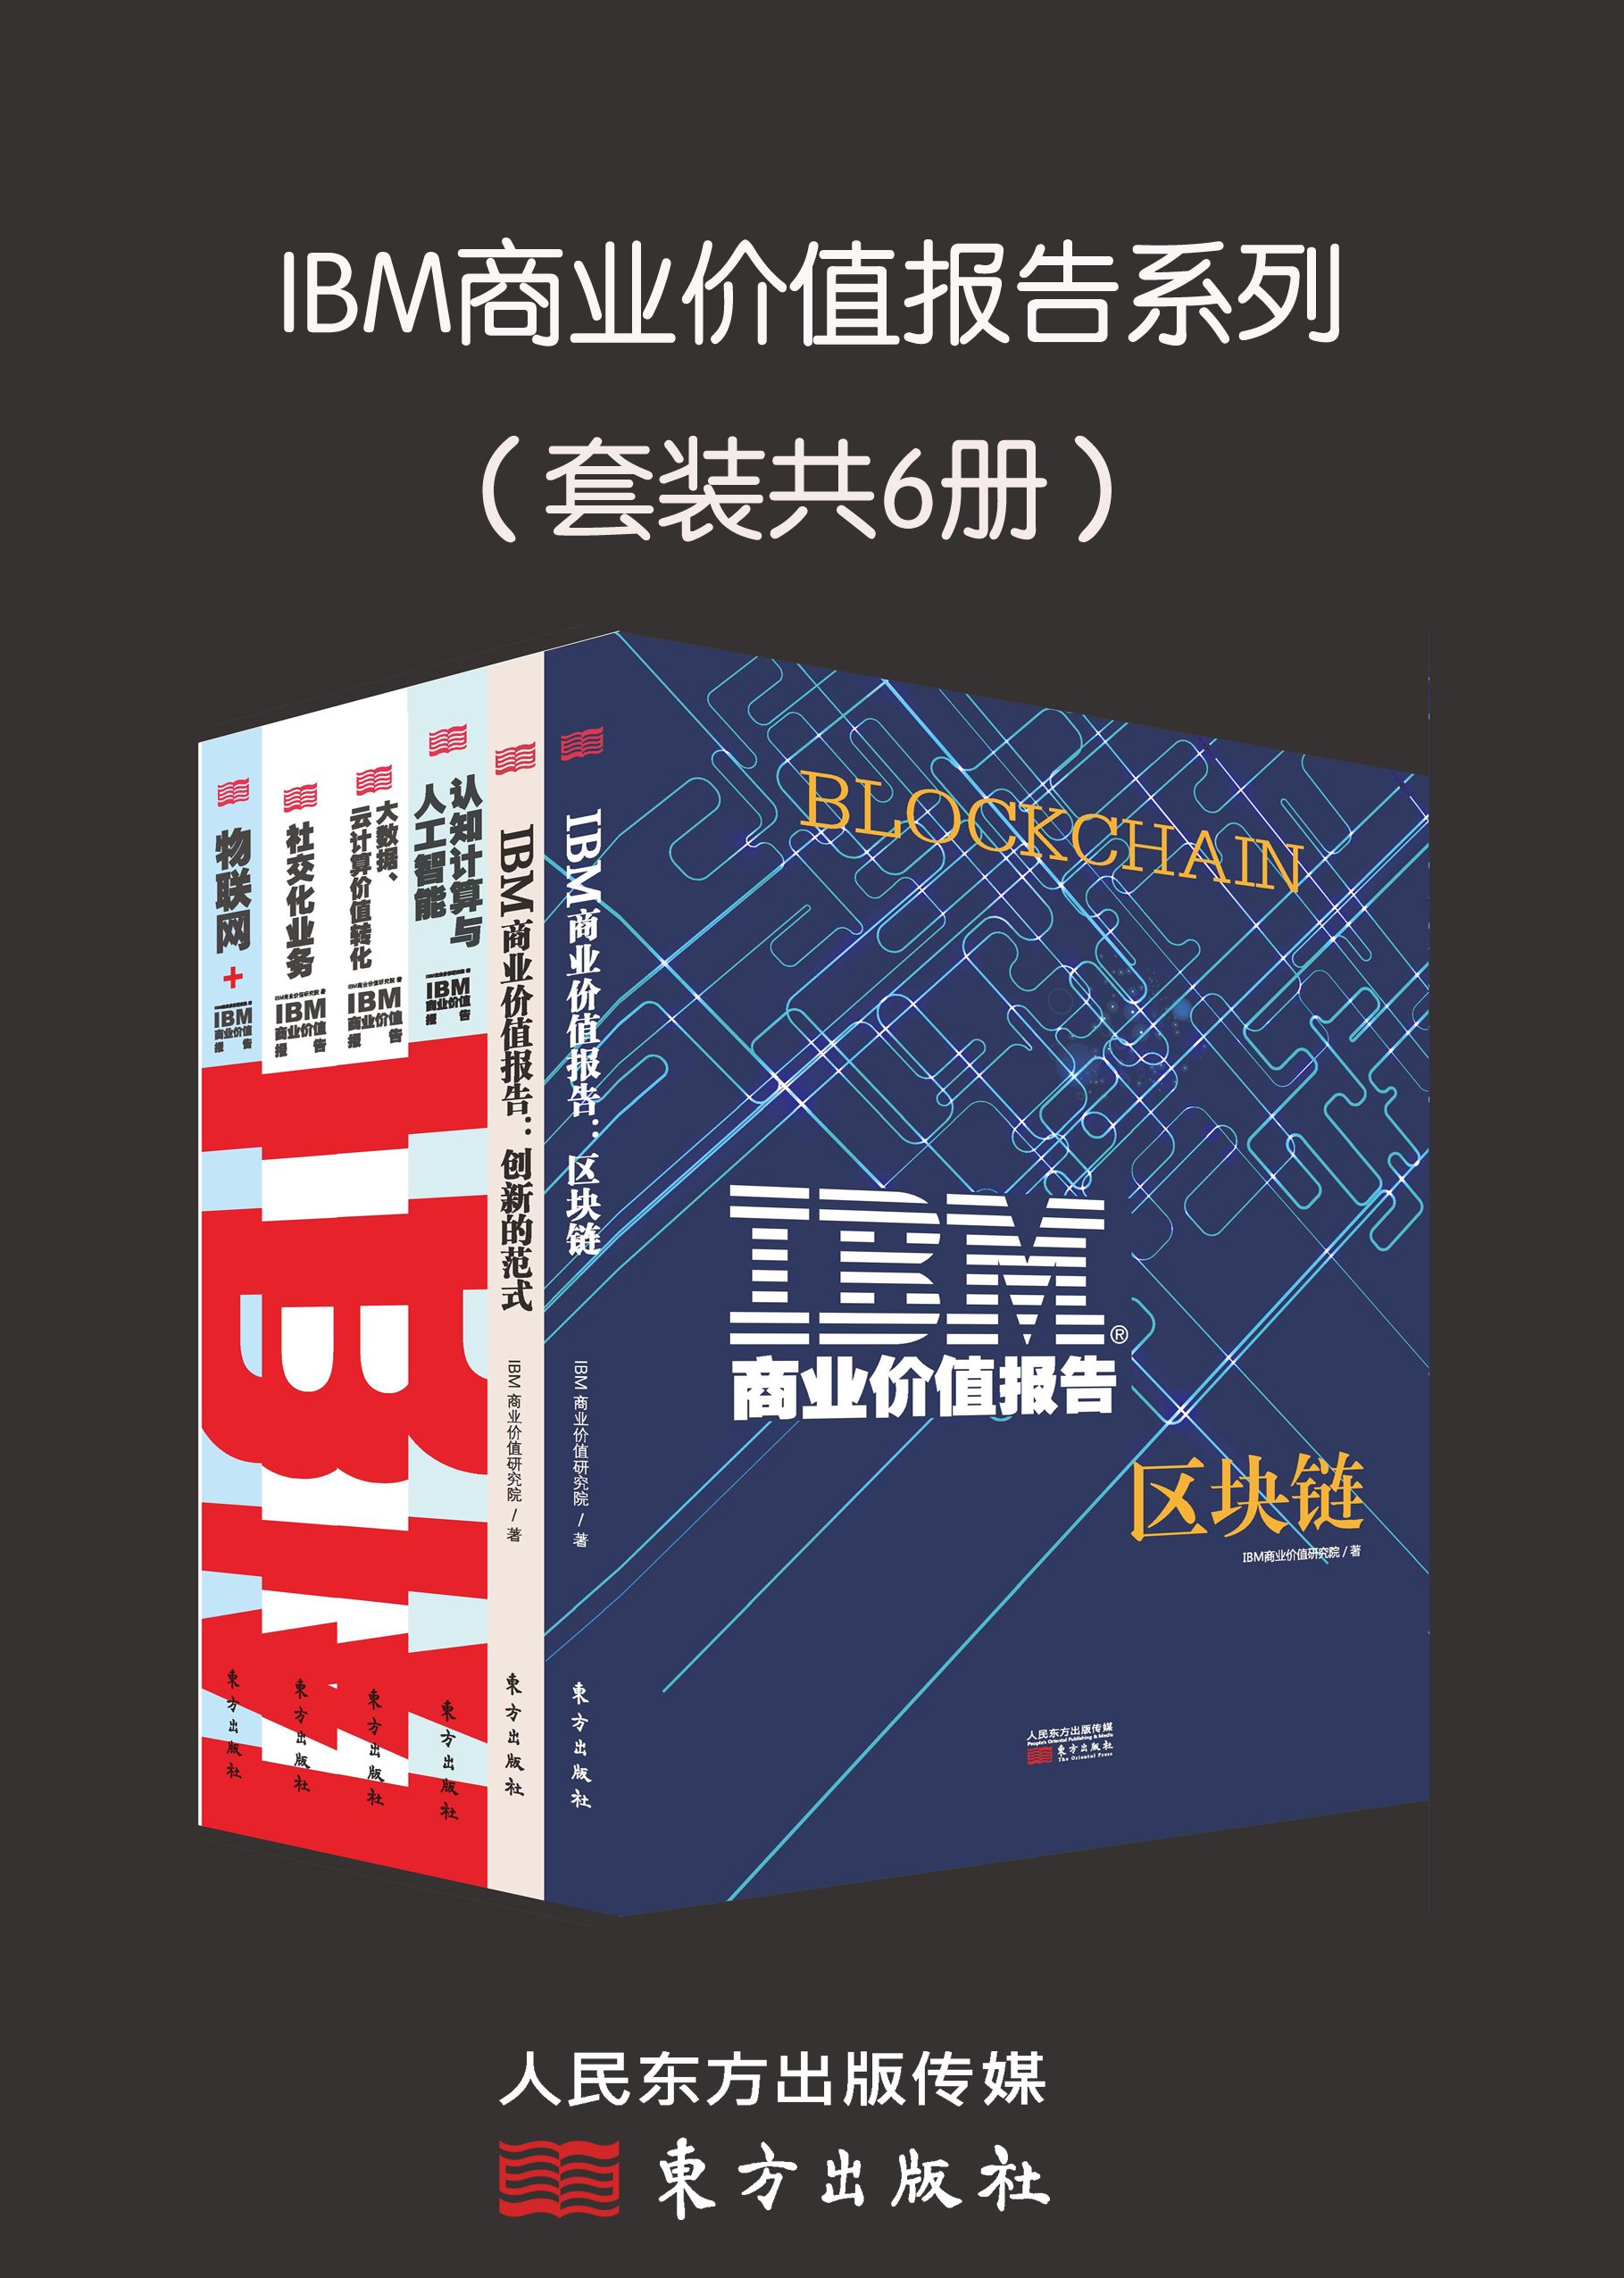 IBM商业价值报告系列（全六册）